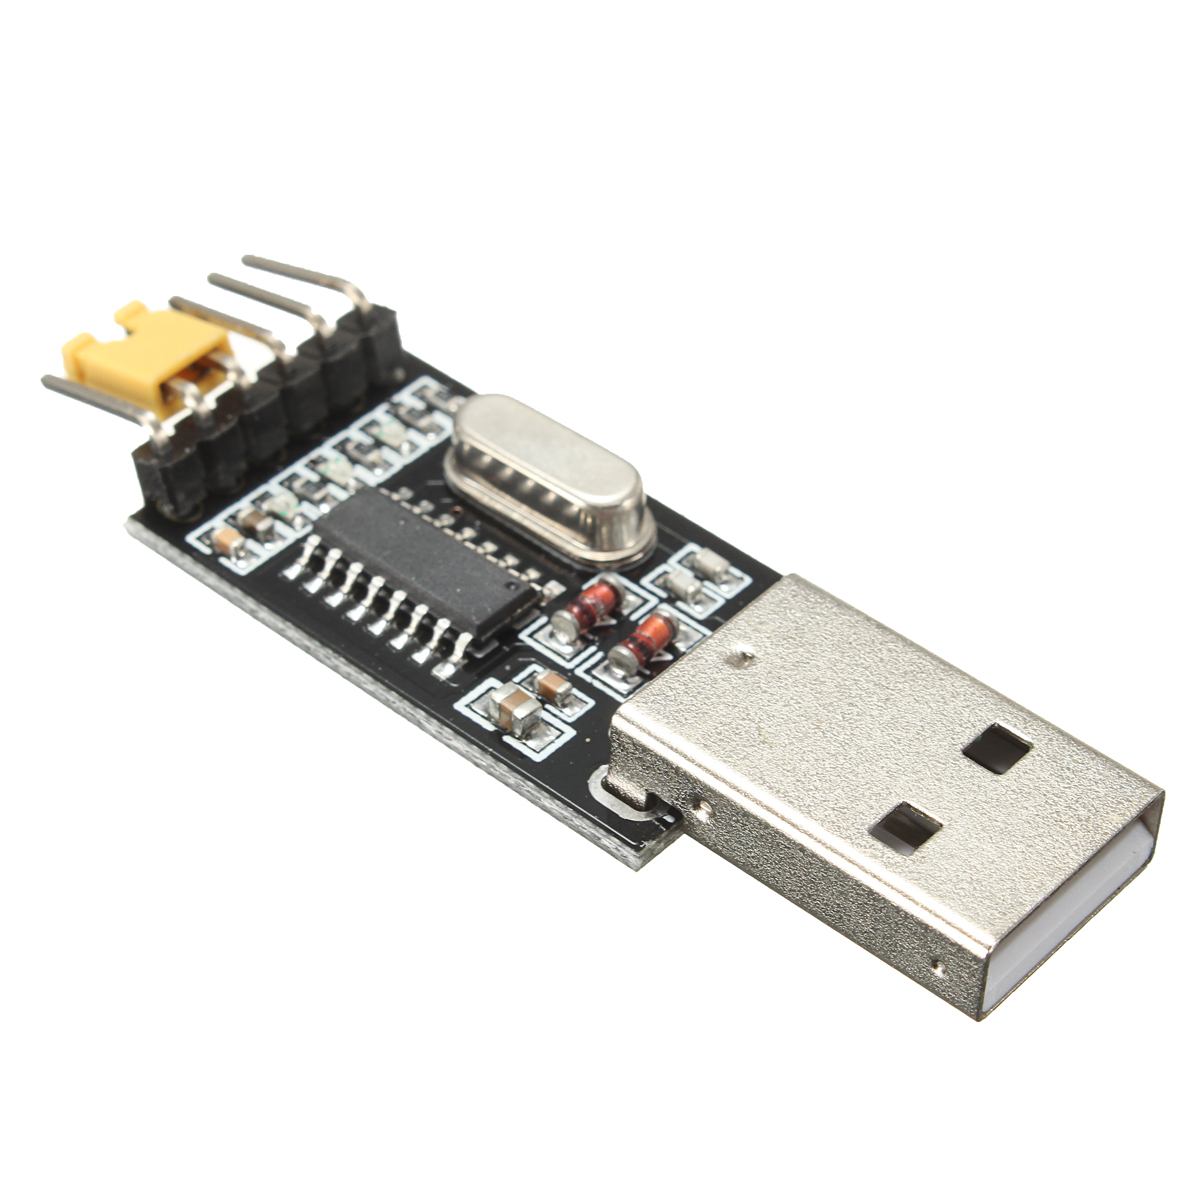 5pcs 3.3V 5V USB to TTL Convertor CH340G UART Serial Adapter Module STC 2